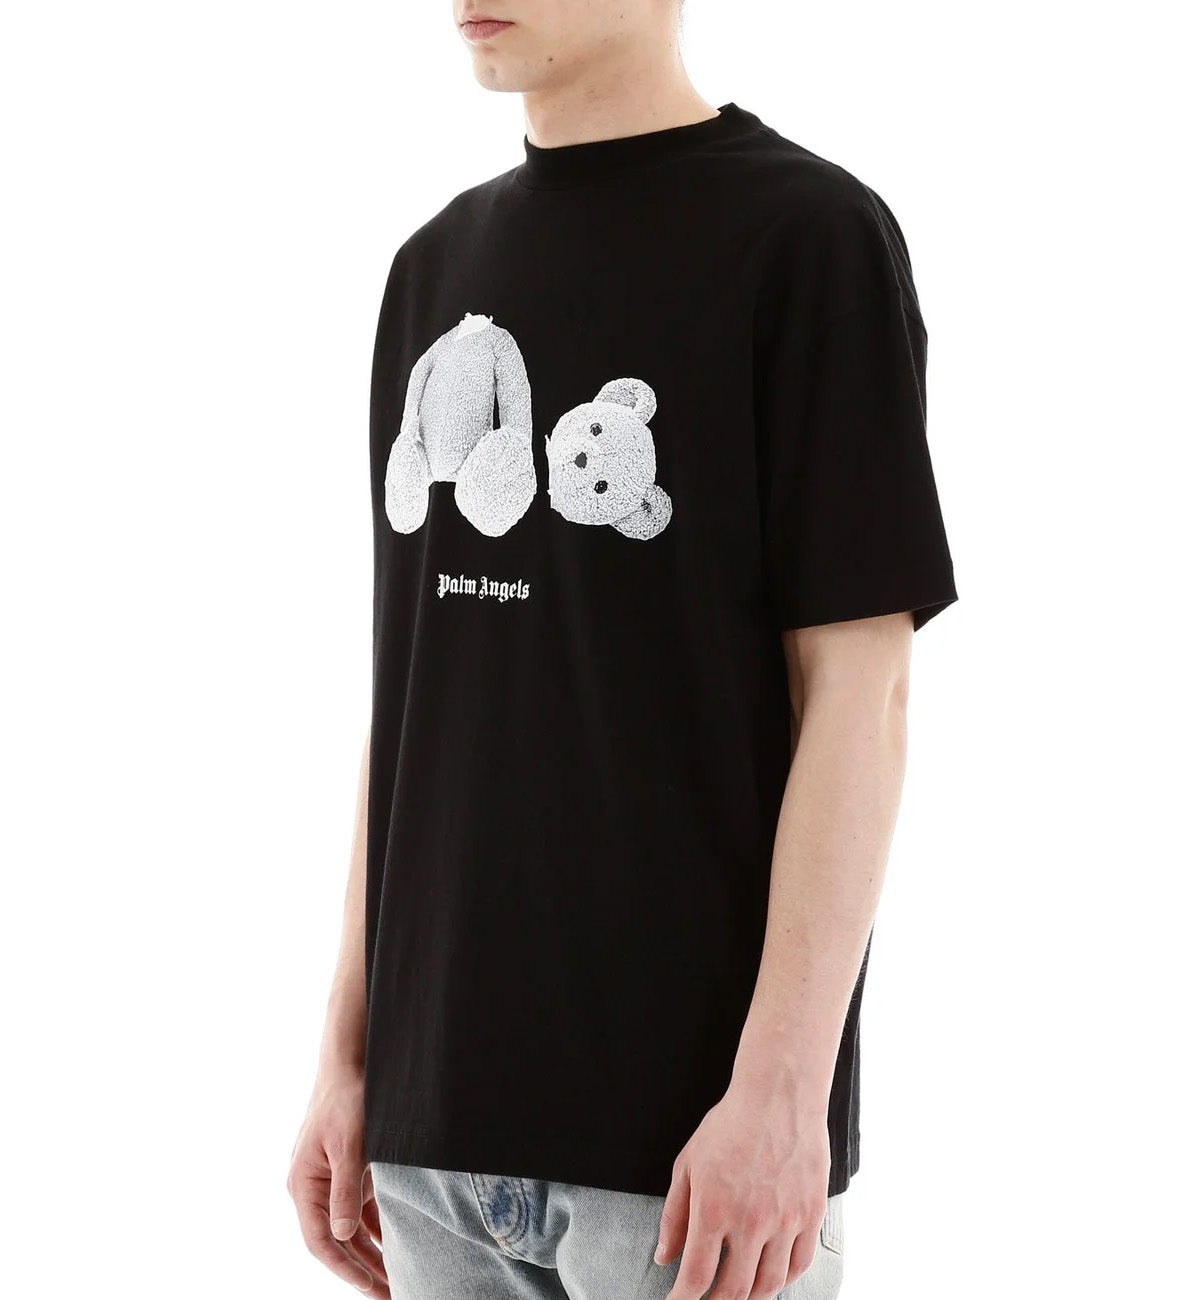 Palm Angels Ice Bear T-Shirt (Black)